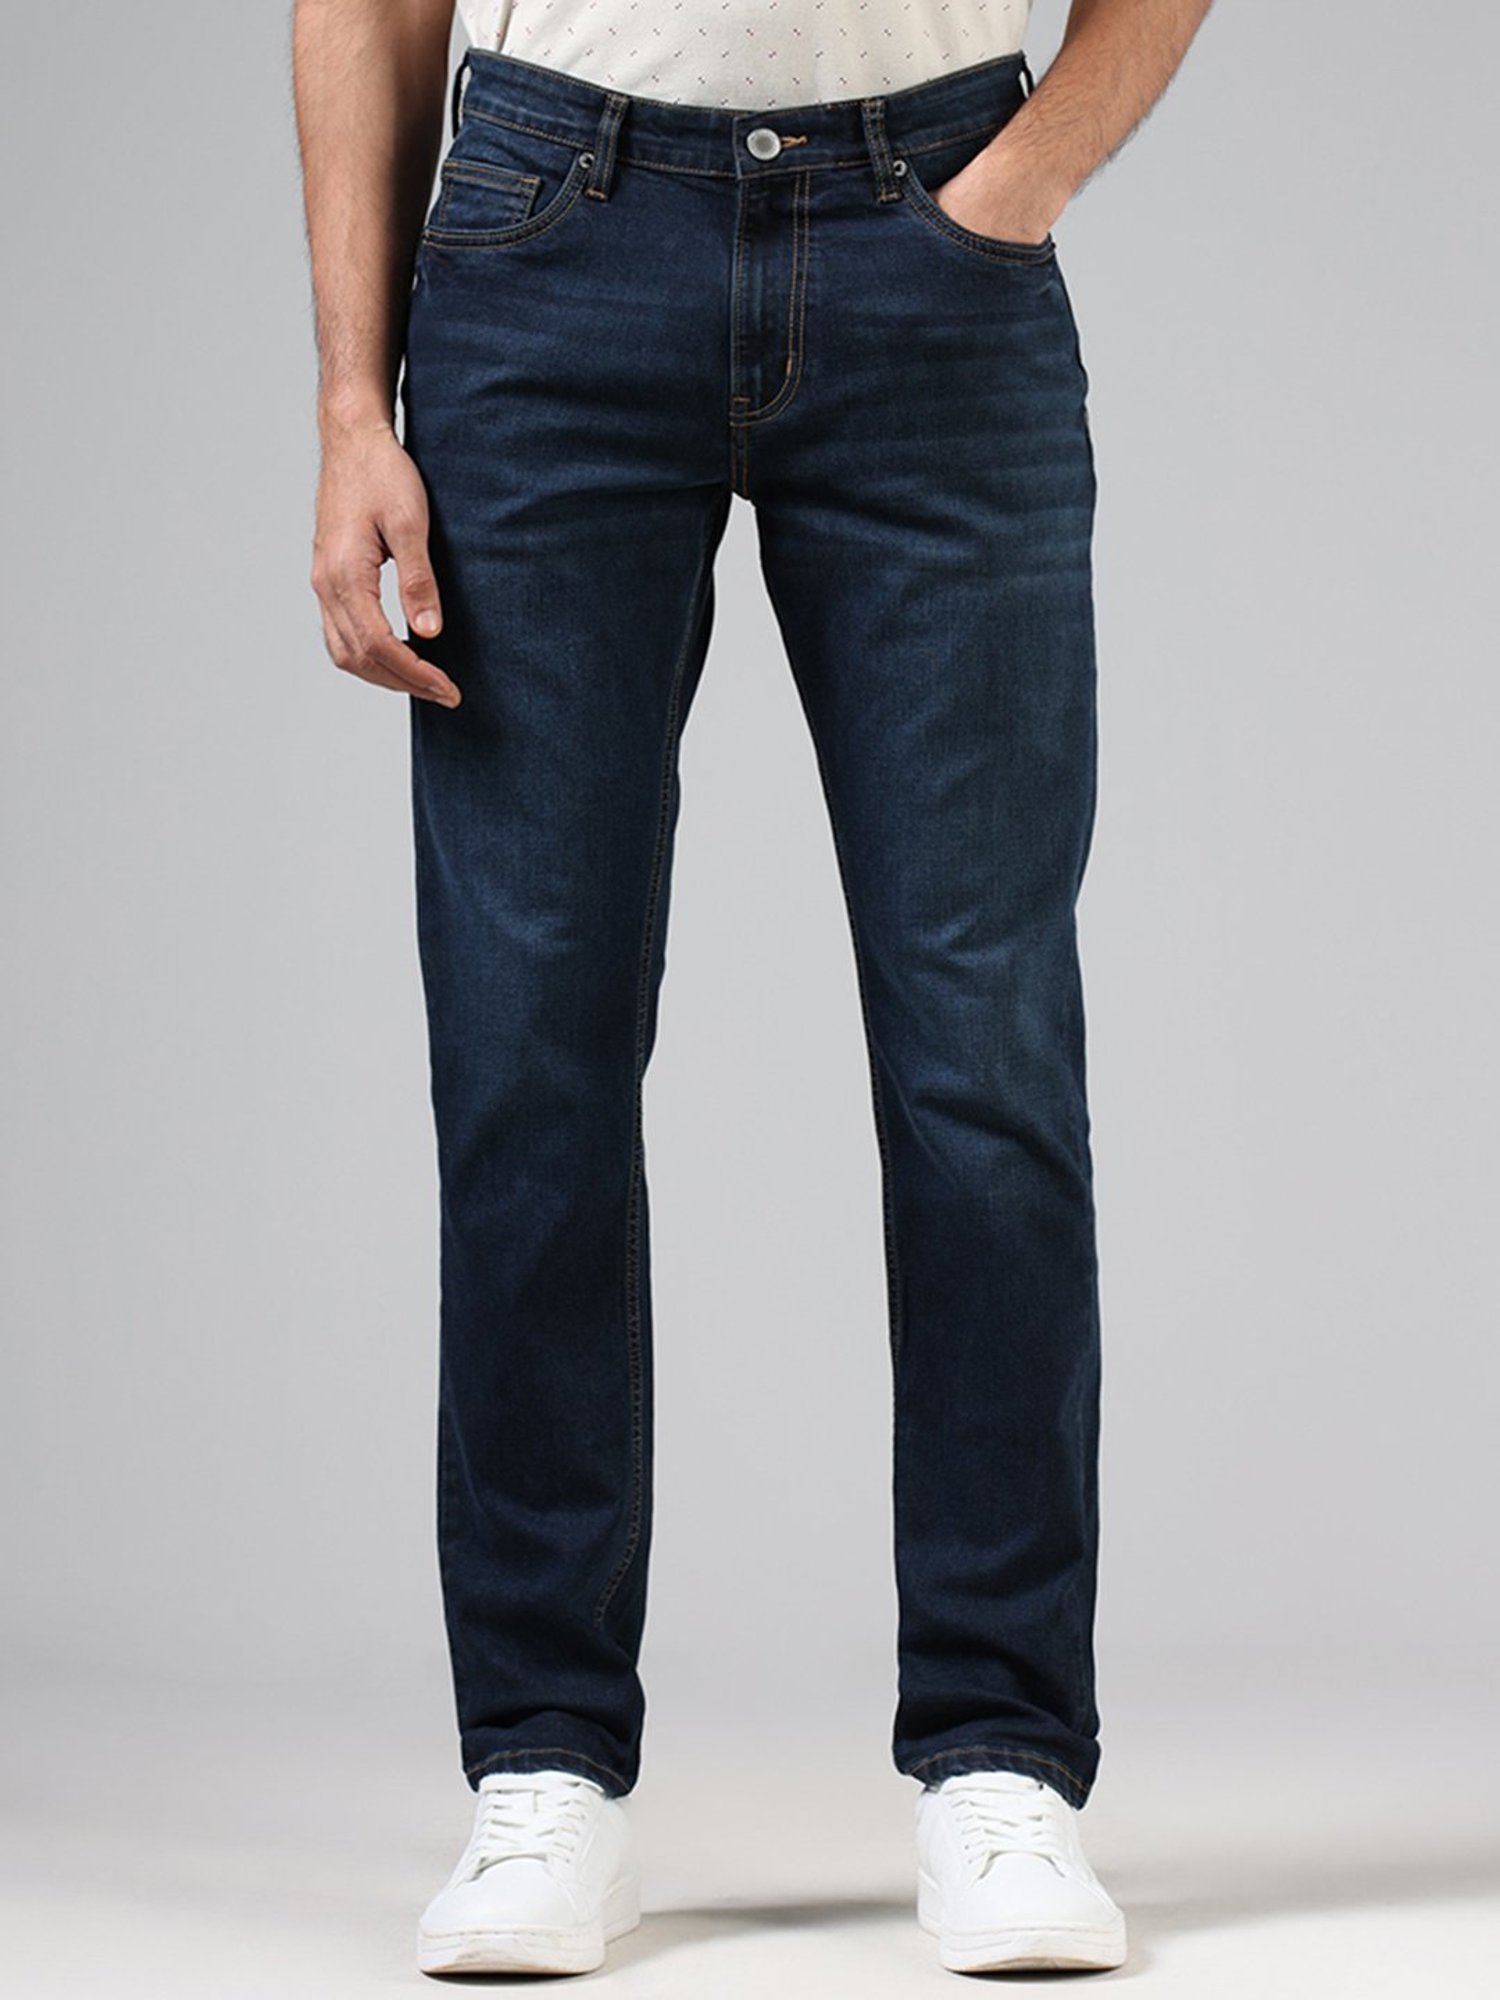 Men Jeans Style CADIZ dark blue STRAIGHT